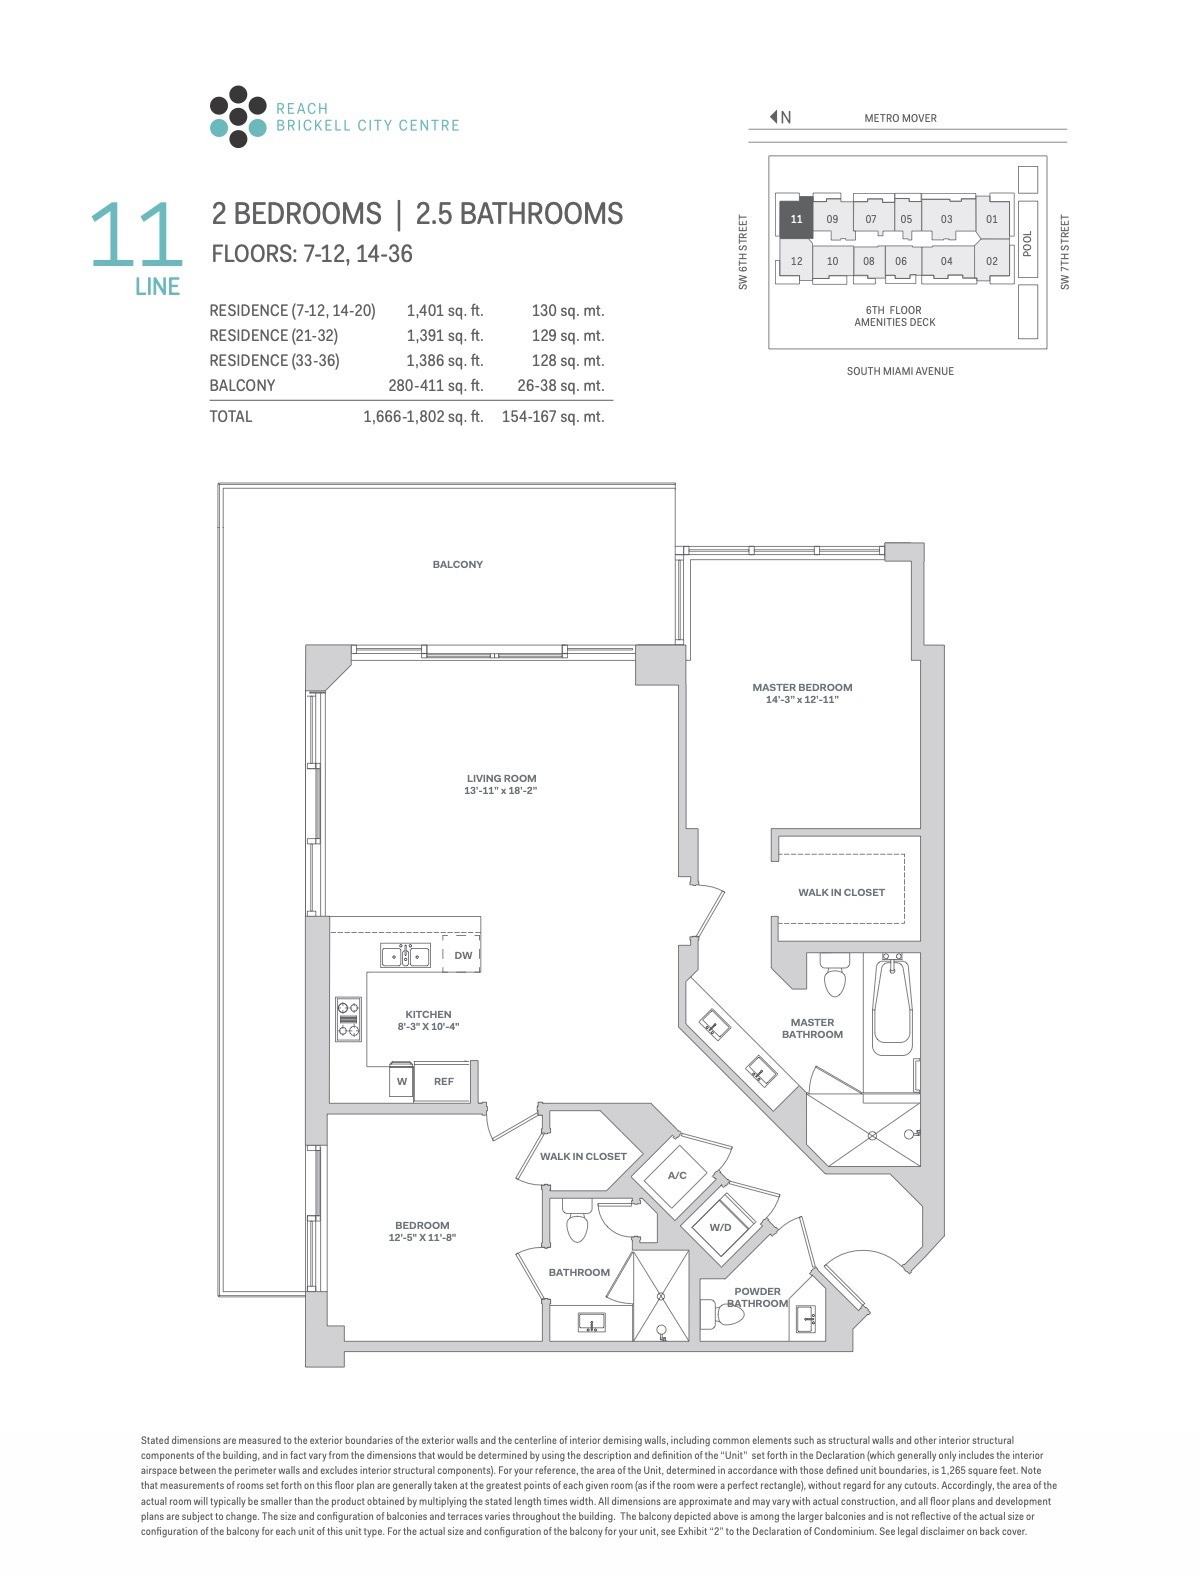 Floor Plan for Reach Brickell City Centre, Line 11